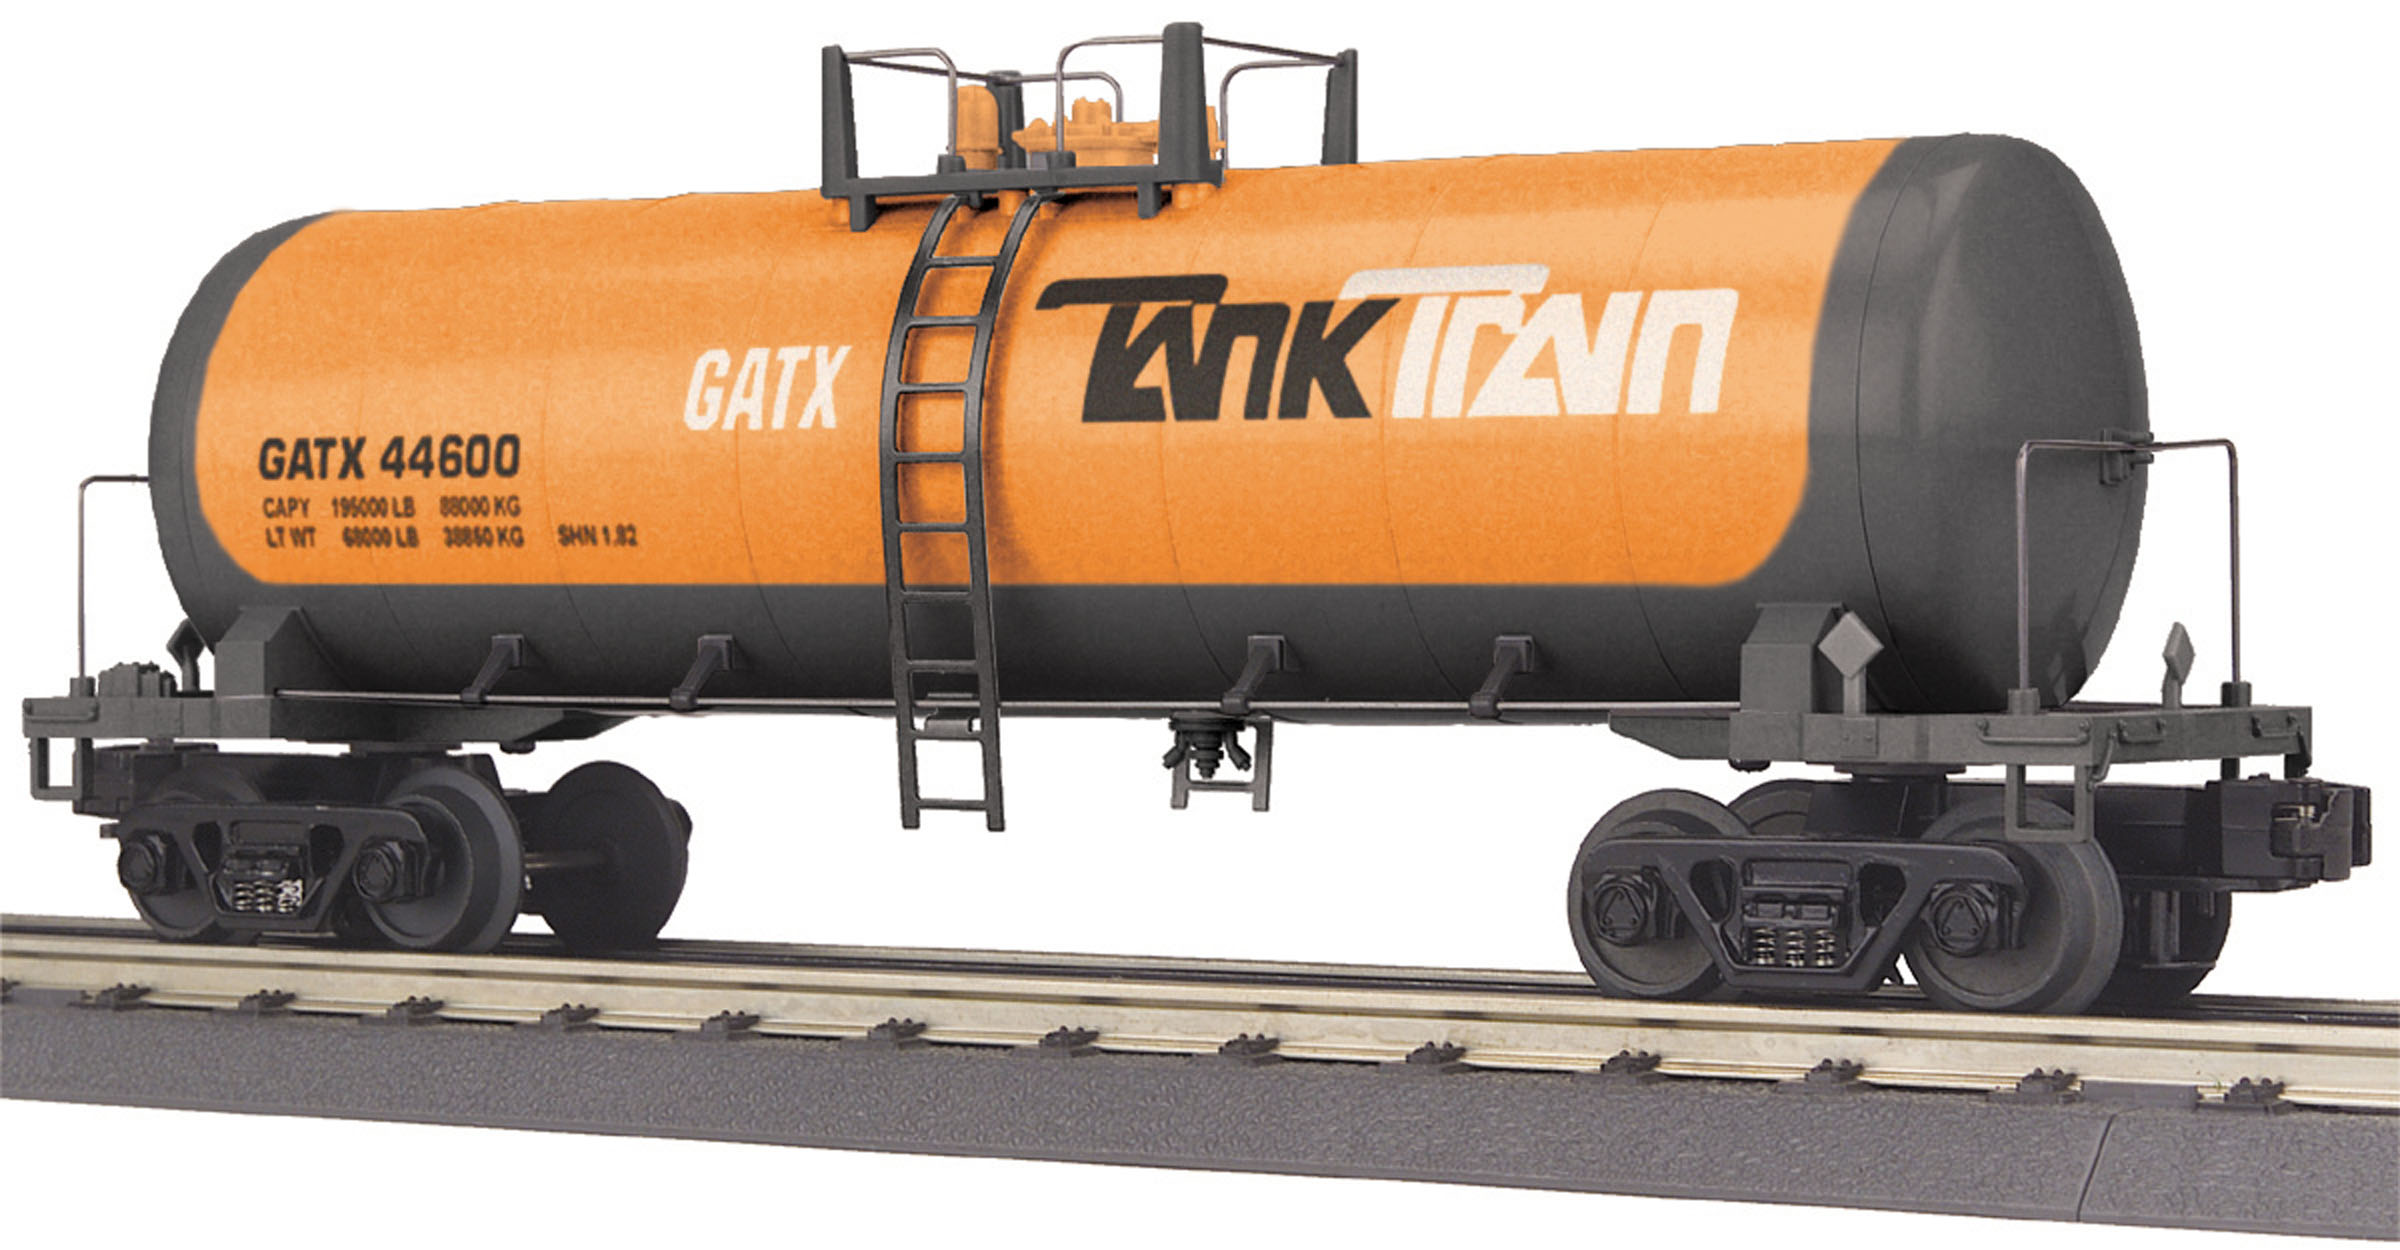 LIONEL GATX TANKTRAIN SCALE TANK CAR O GAUGE train freight tanker 6-85115 NEW 